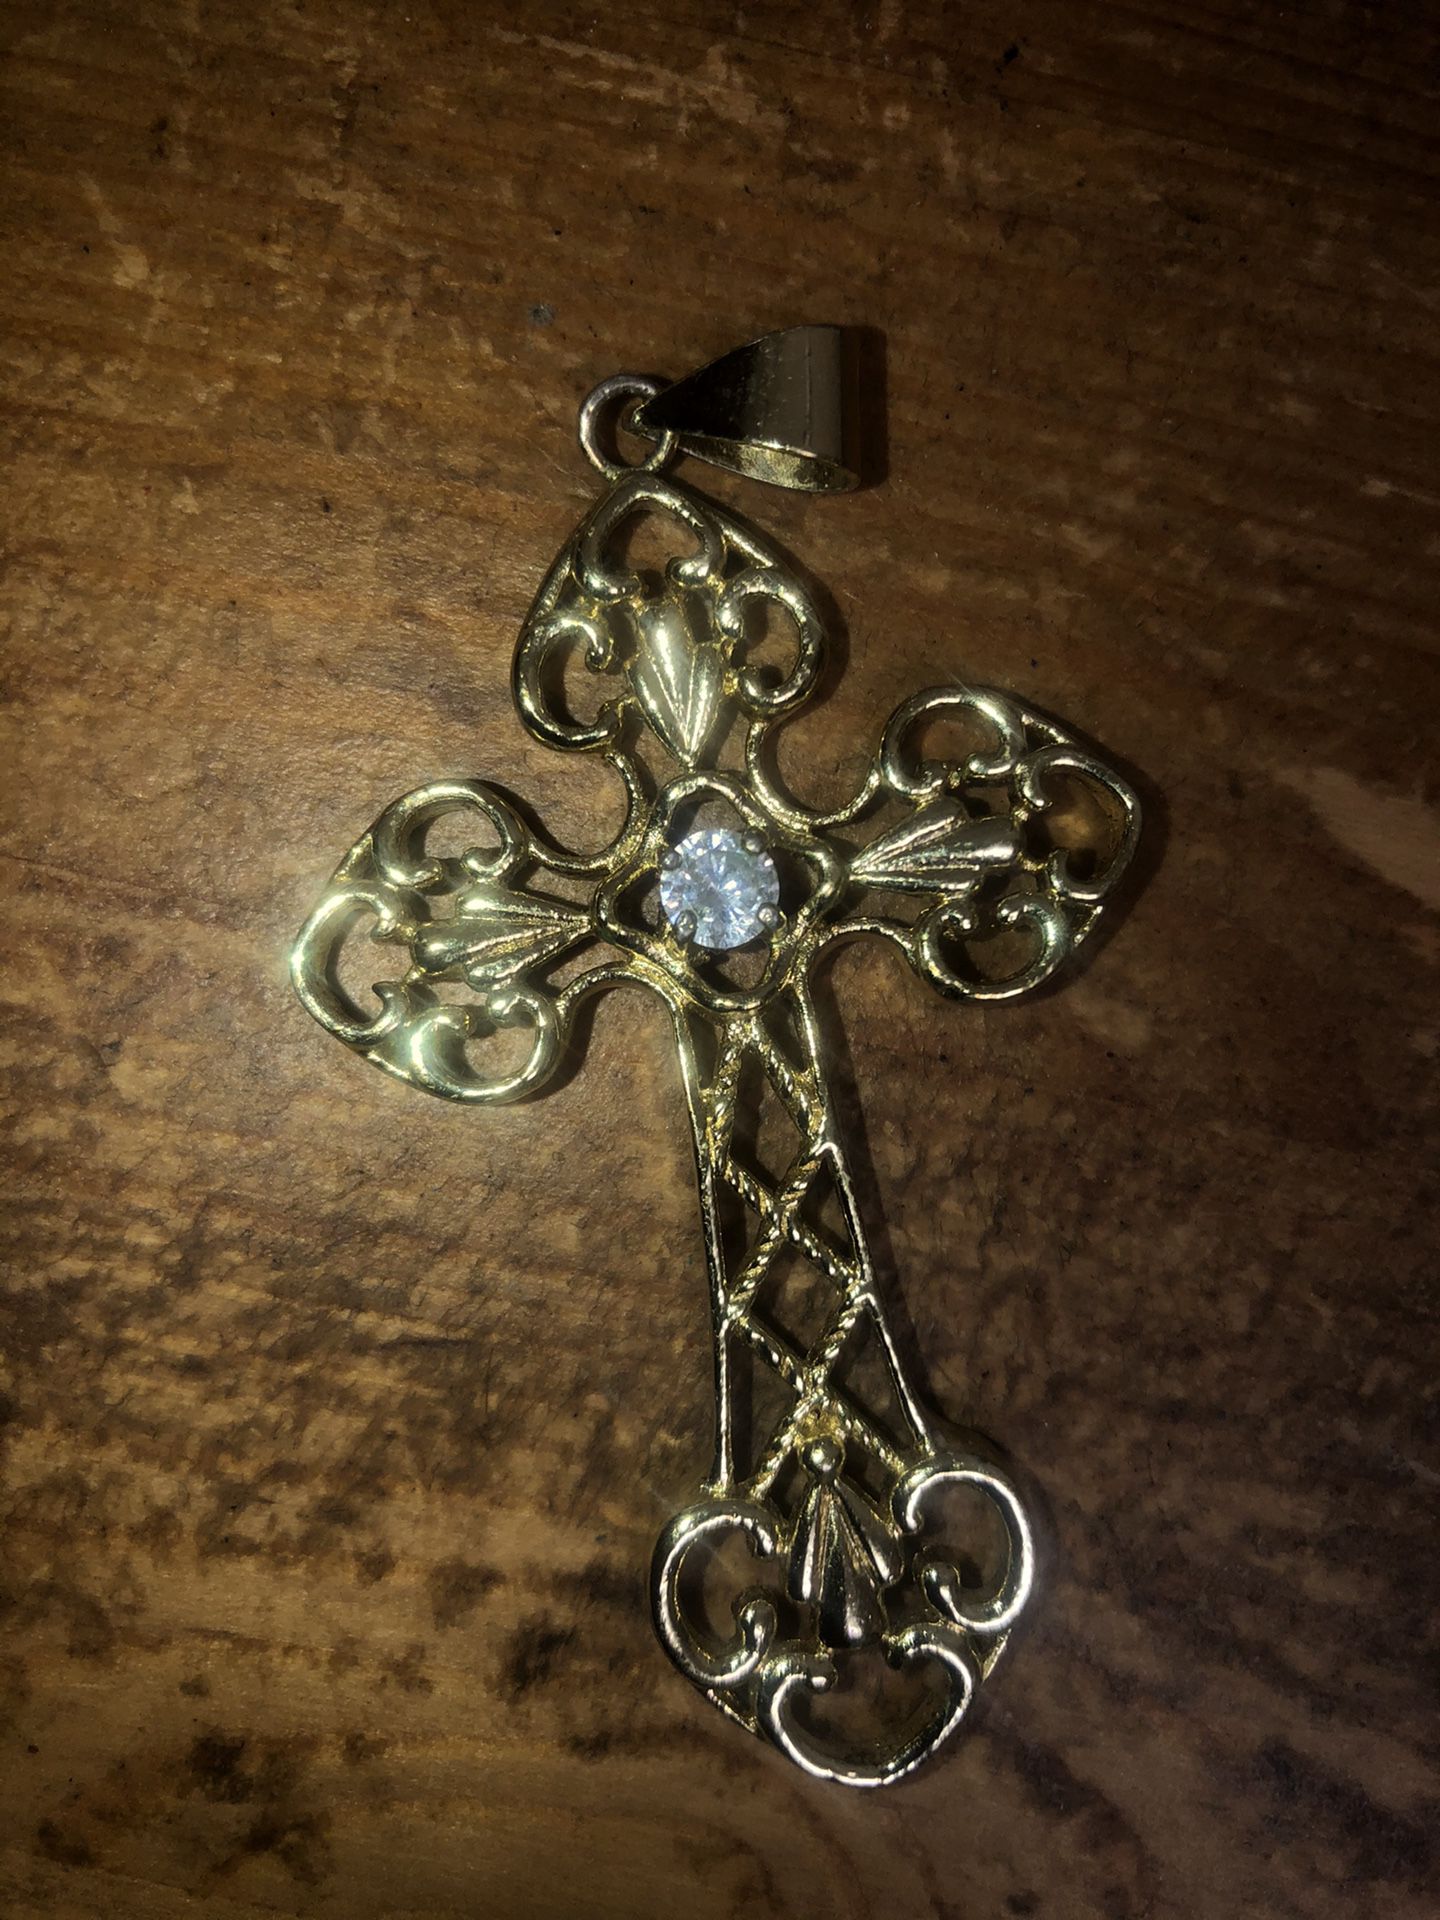 New cross pendant